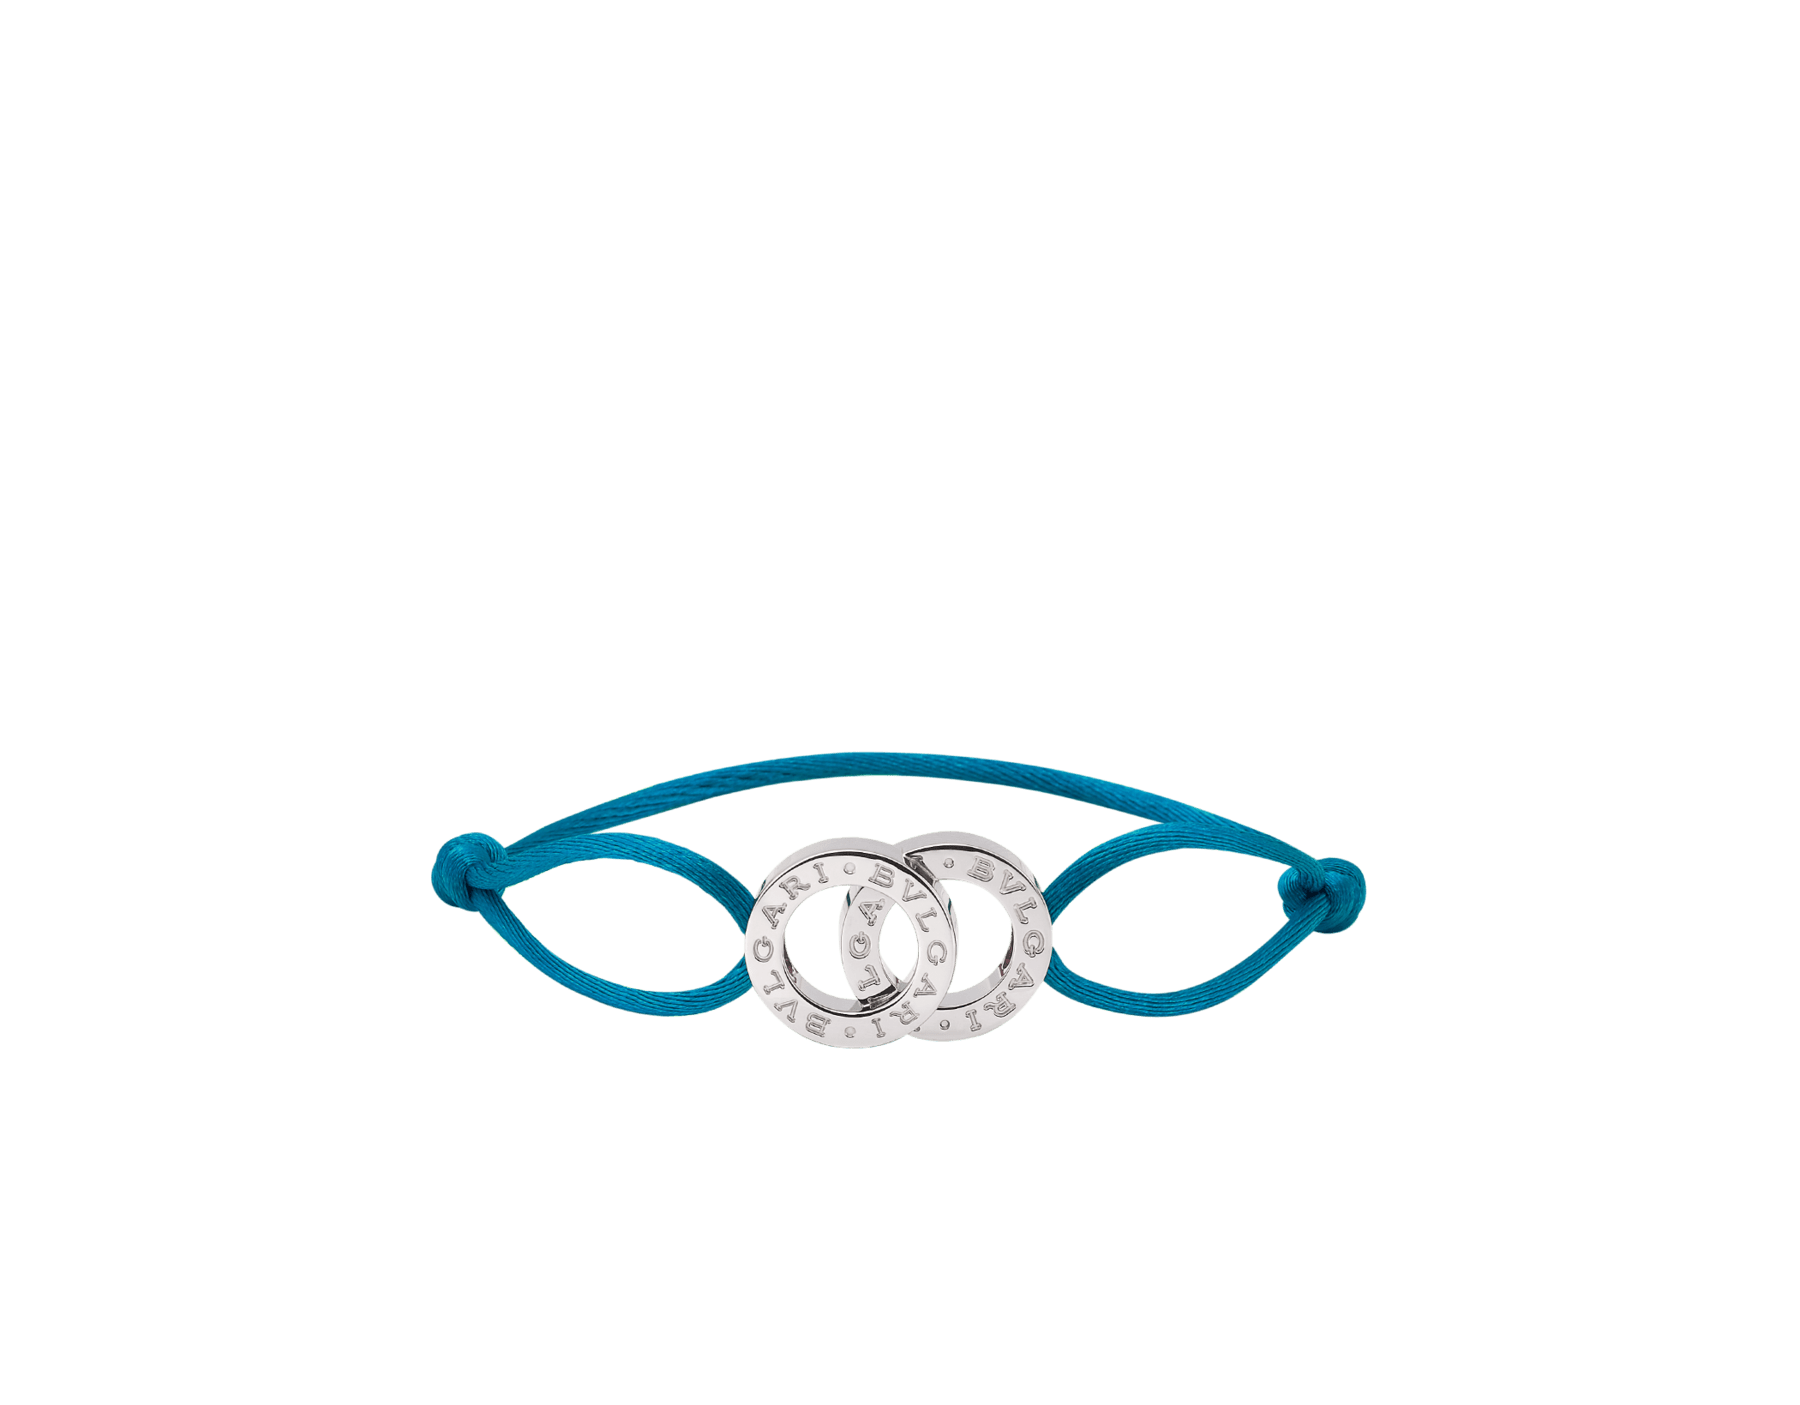 White gold Serpenti Viper Bracelet with 2.8 ct Diamonds | Bulgari Official  Store